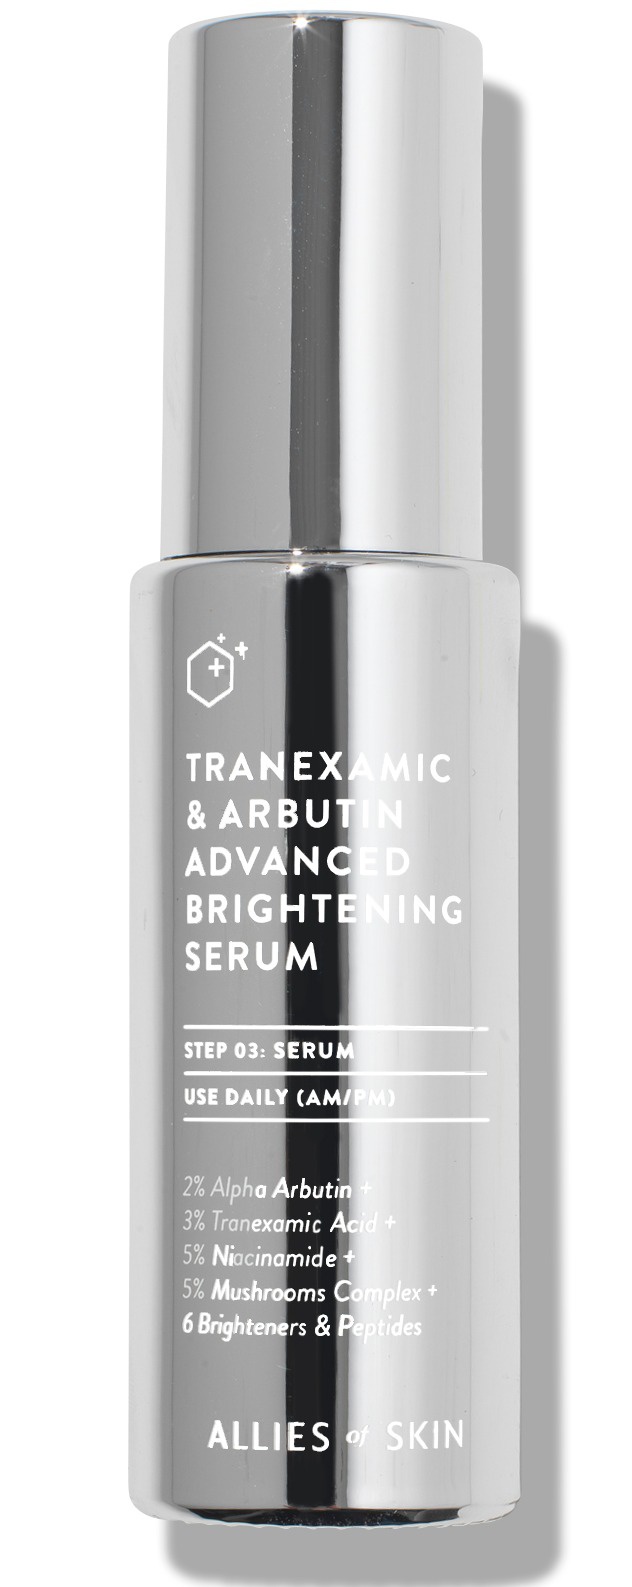 Allies of Skin Tranexamic Acid & Arbutin Advanced Brightening Serum